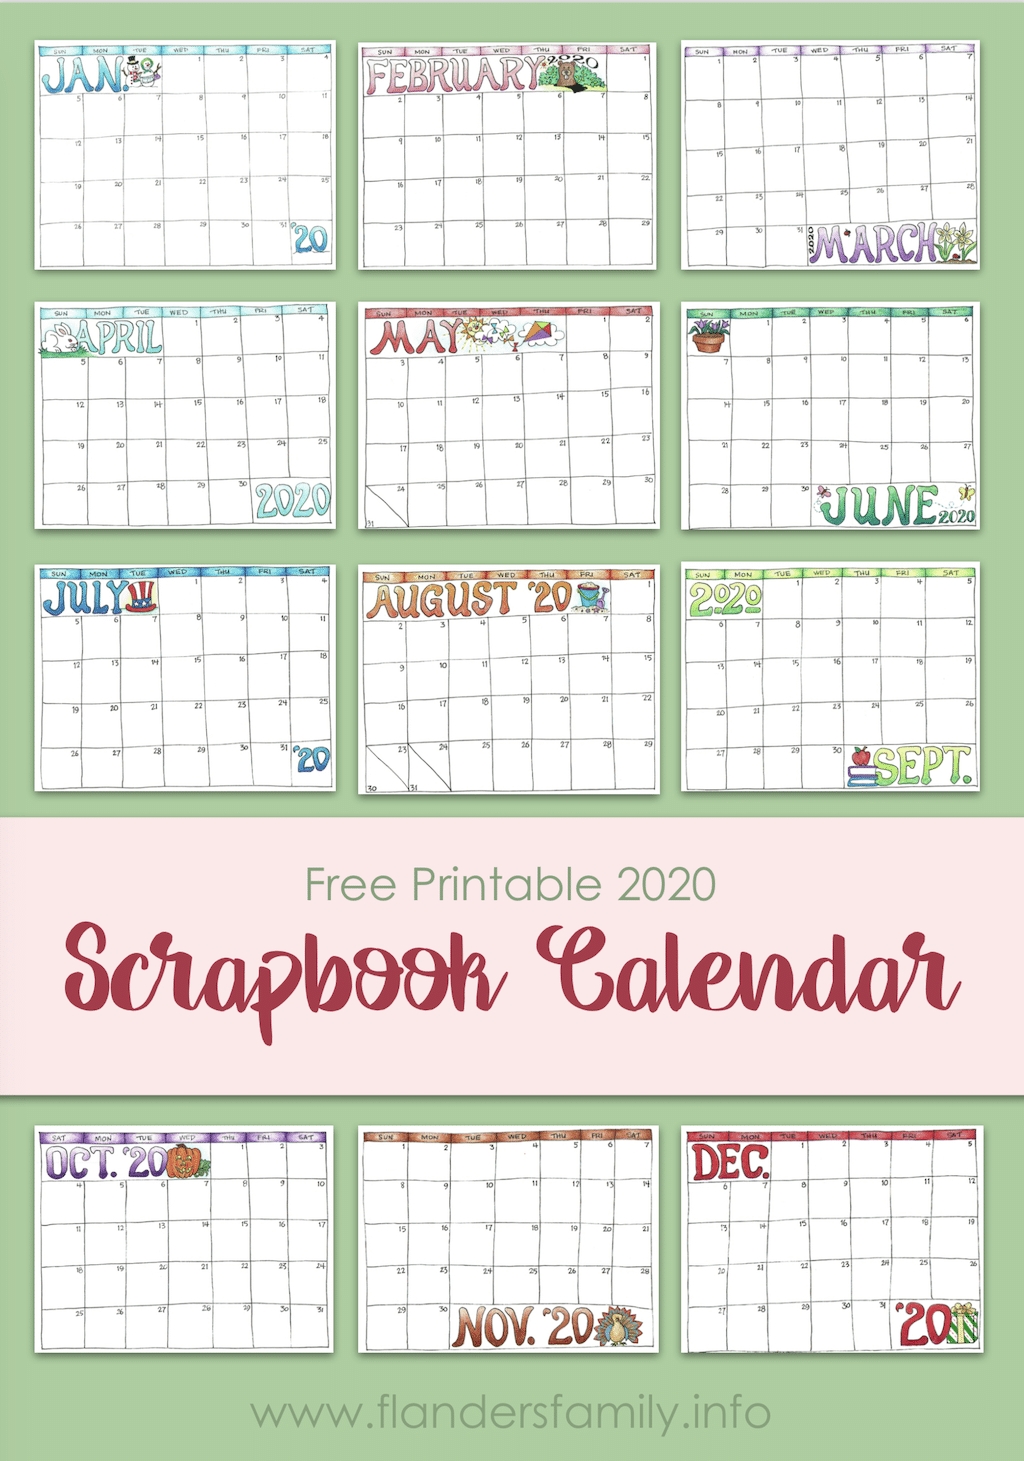 Reader Request: 2020 Scrapbooking Calendar - Flanders Family